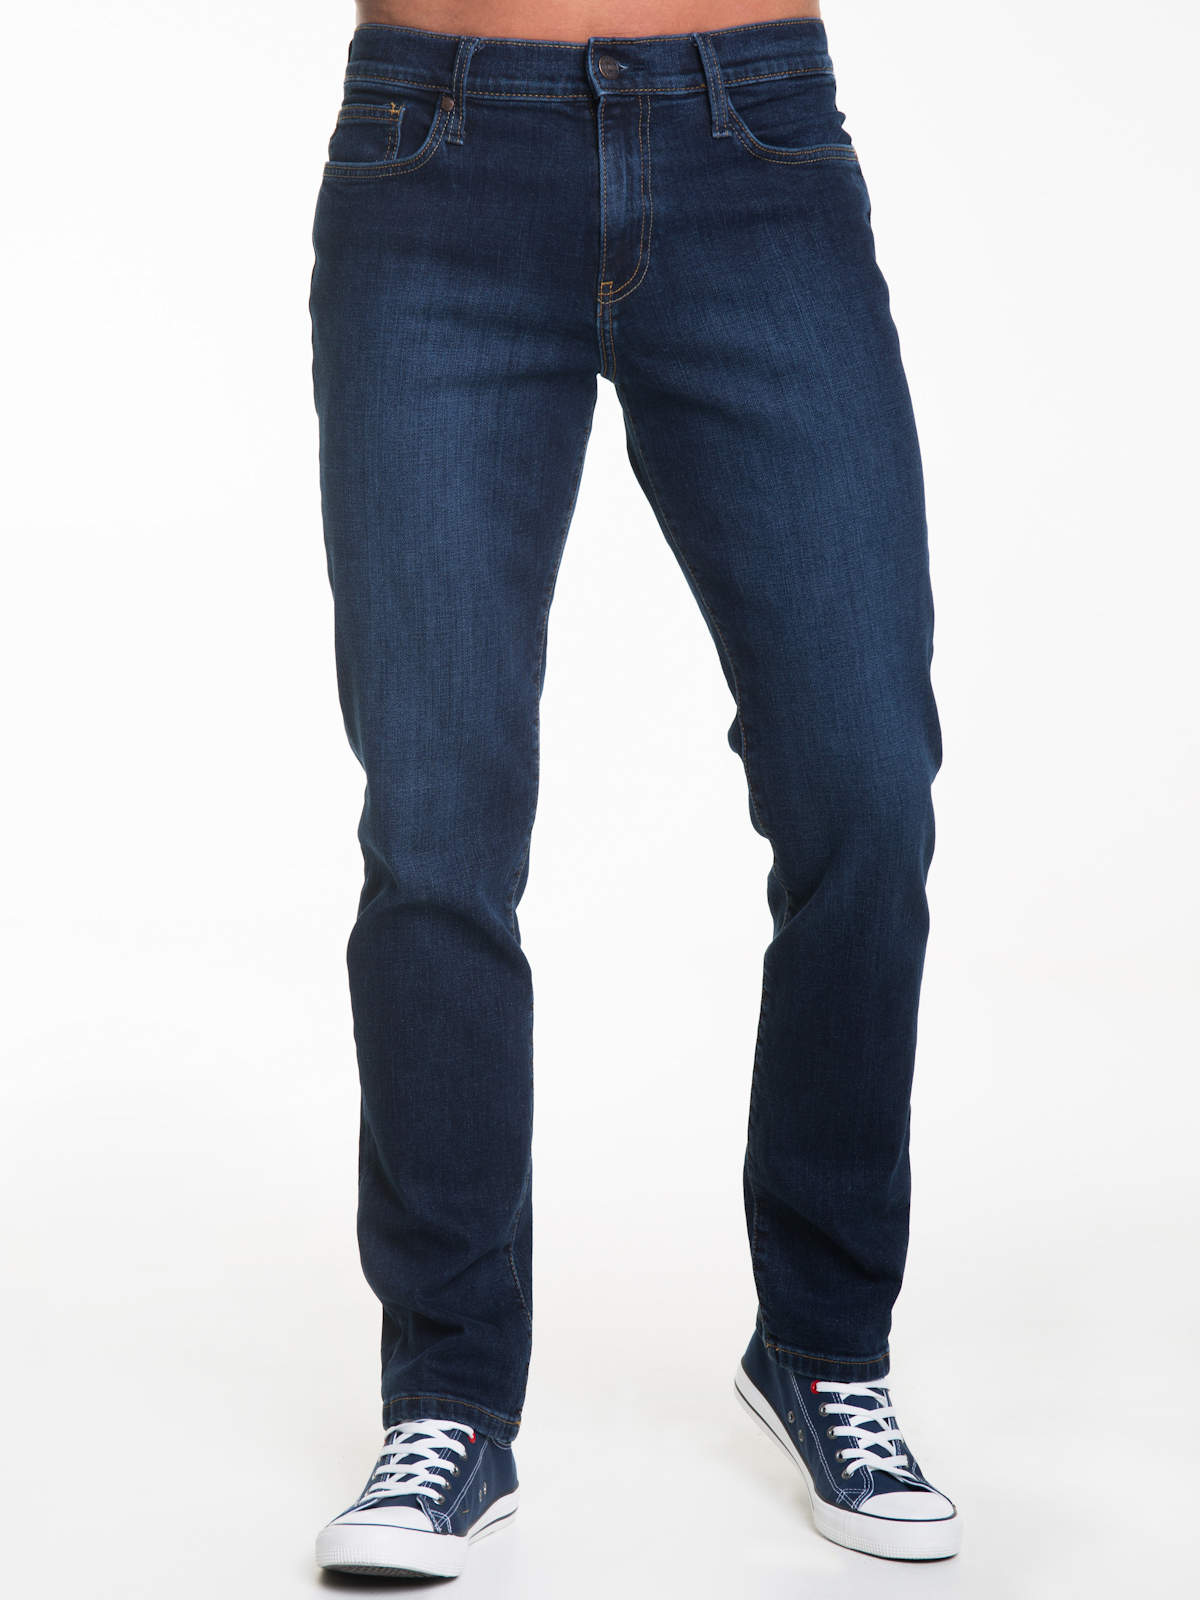 Big Star Mens Jeans Roger 655 Trousers Dark Blue Denim Slim Fit | eBay